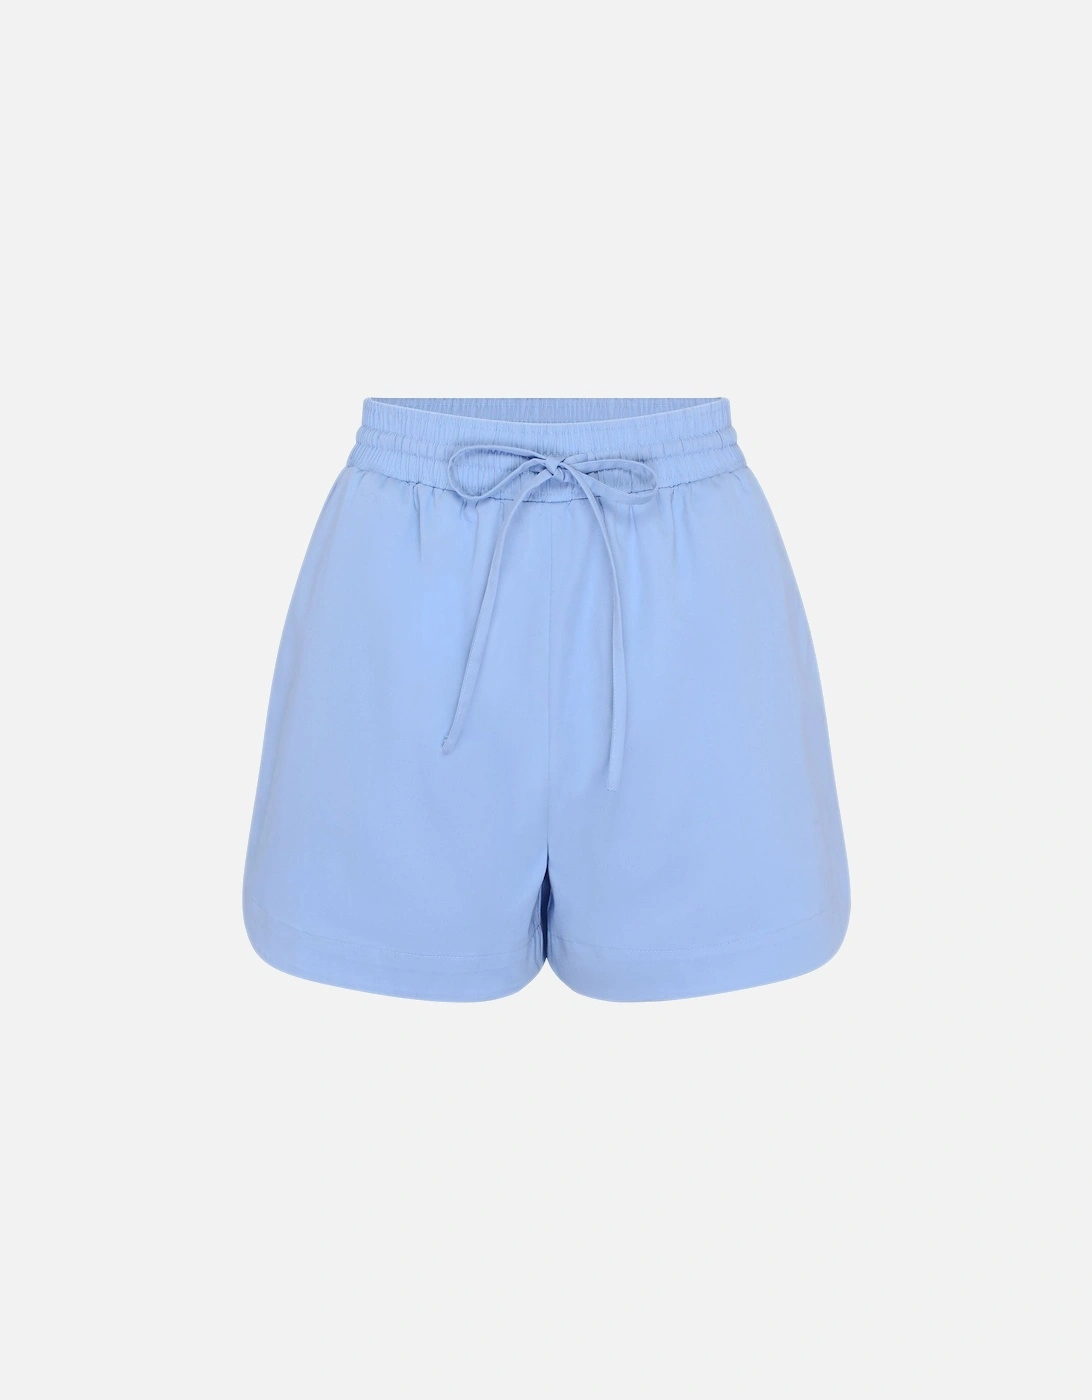 Sunny Shorts in Blue